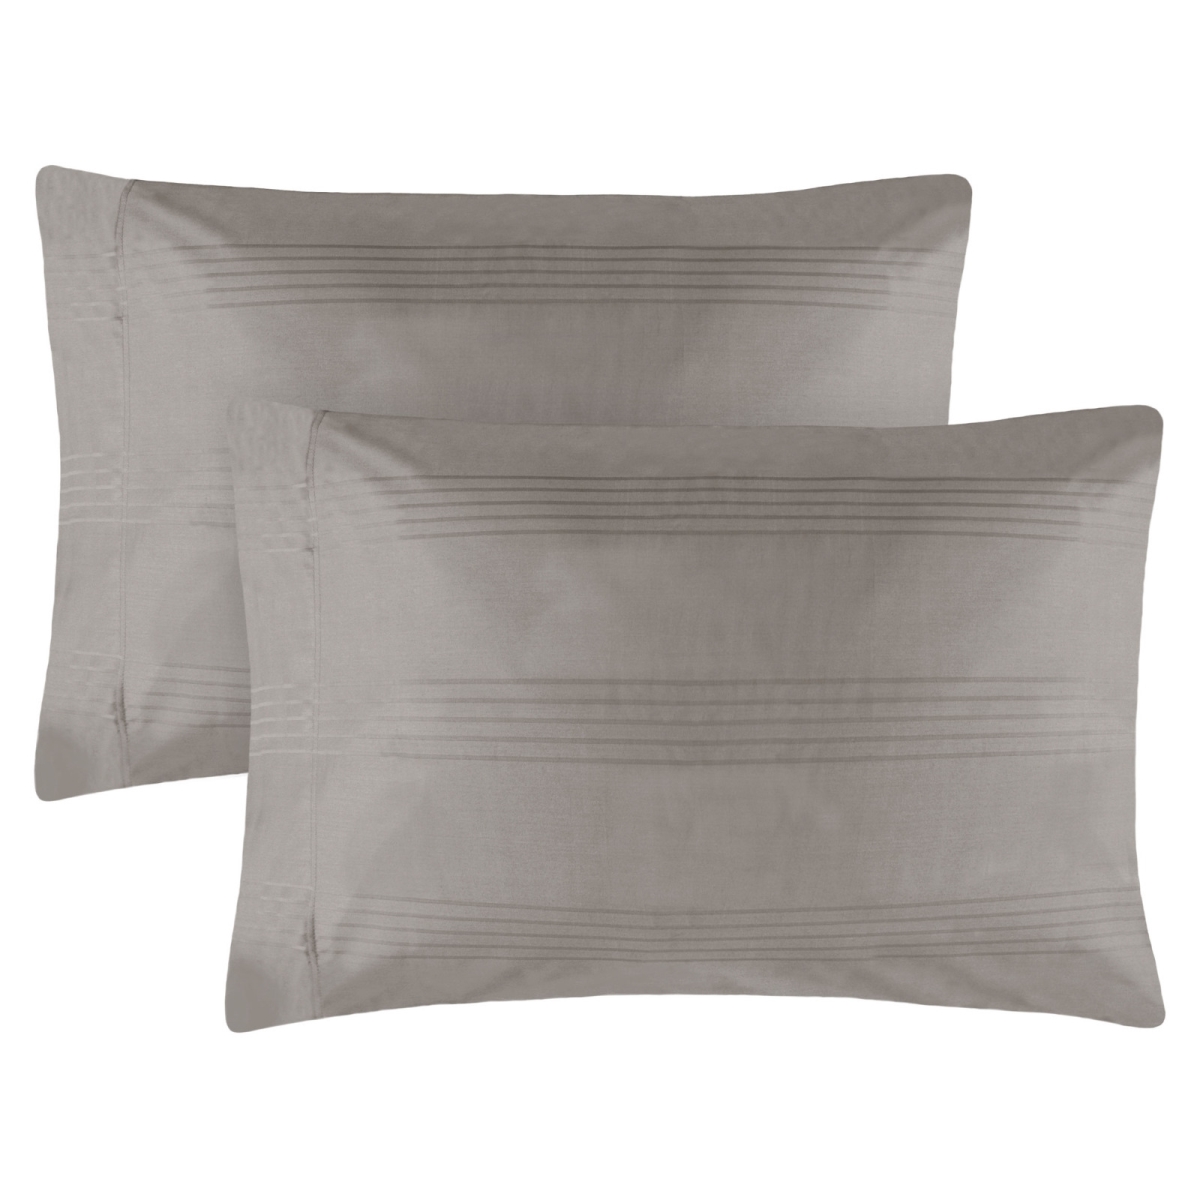 Yms008229 Premium 420 Thread Count 100 Percent Cotton Pillowcase Set, Charcoal - King - 2 Piece